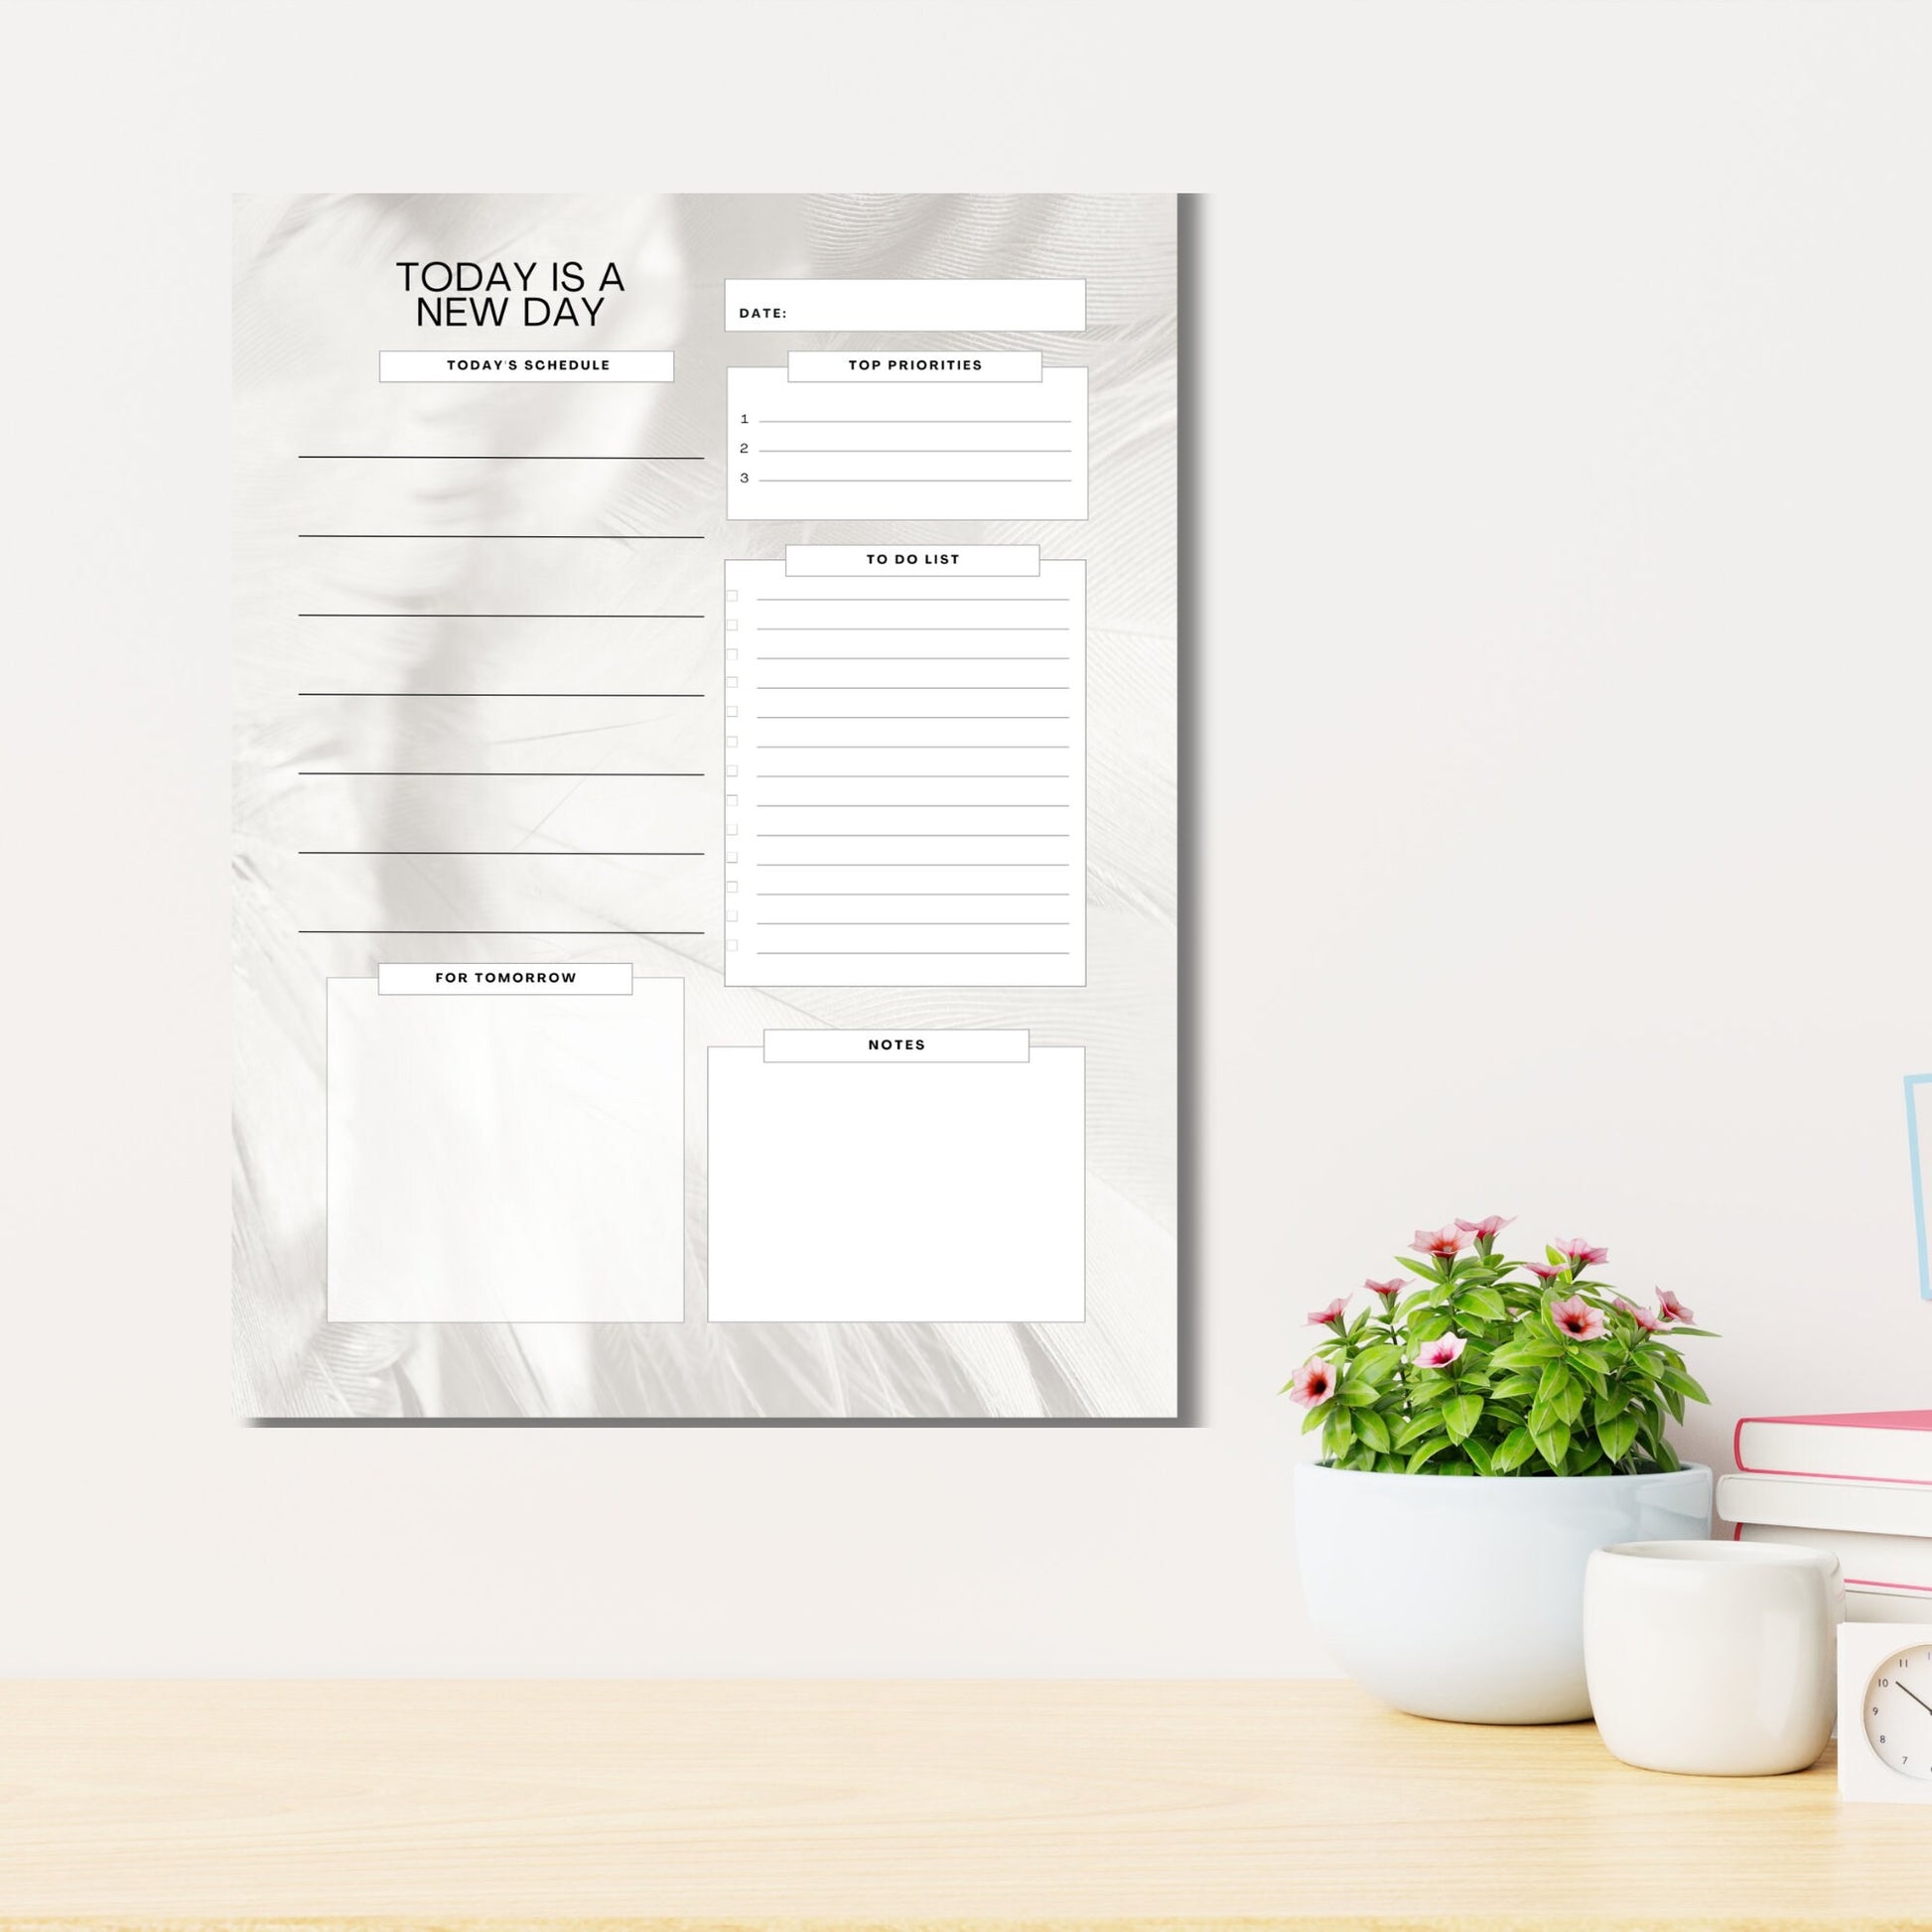 Acrylic Planner, Acrylic Calendar, Wall Calendar, Dry Erase Board, Schedule Tracker, Minimal Day Planner, White Daily Planner, List ToDo